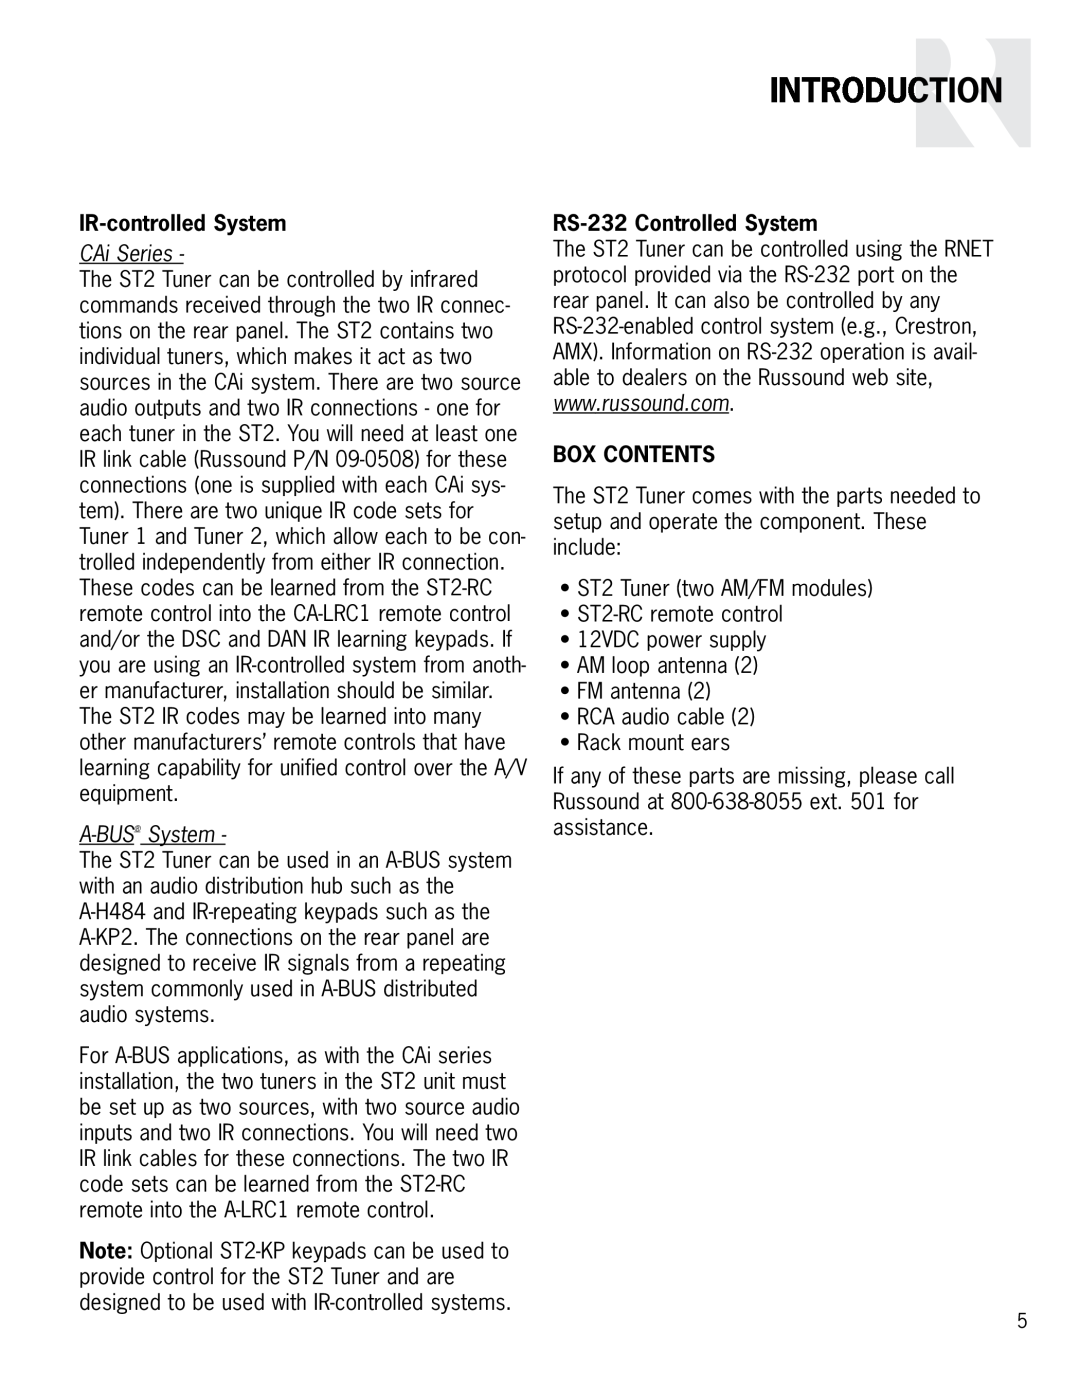 Integra ST2 IR-controlledSystem, CAi Series, A-BUS System, RS-232Controlled System, Box Contents, Introduction 